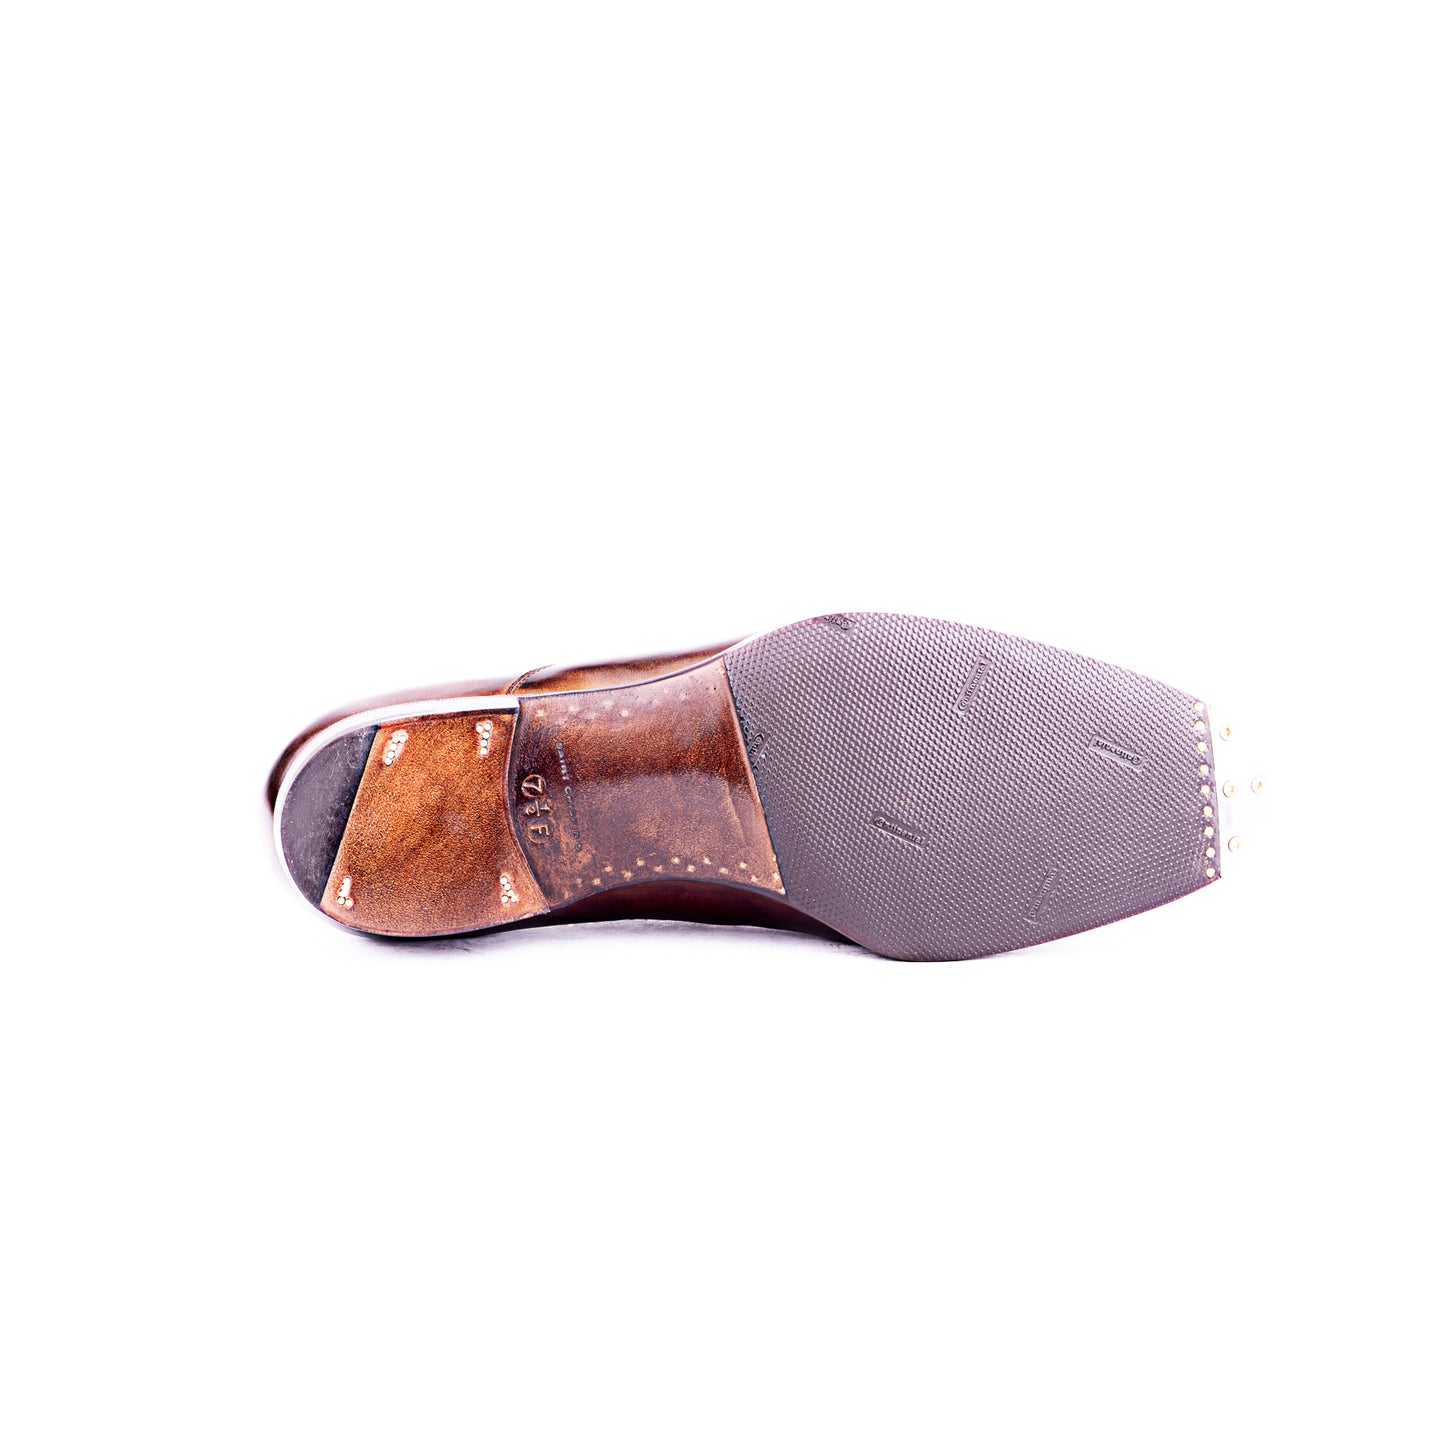 Elastic sided plain loafer - 7.5F